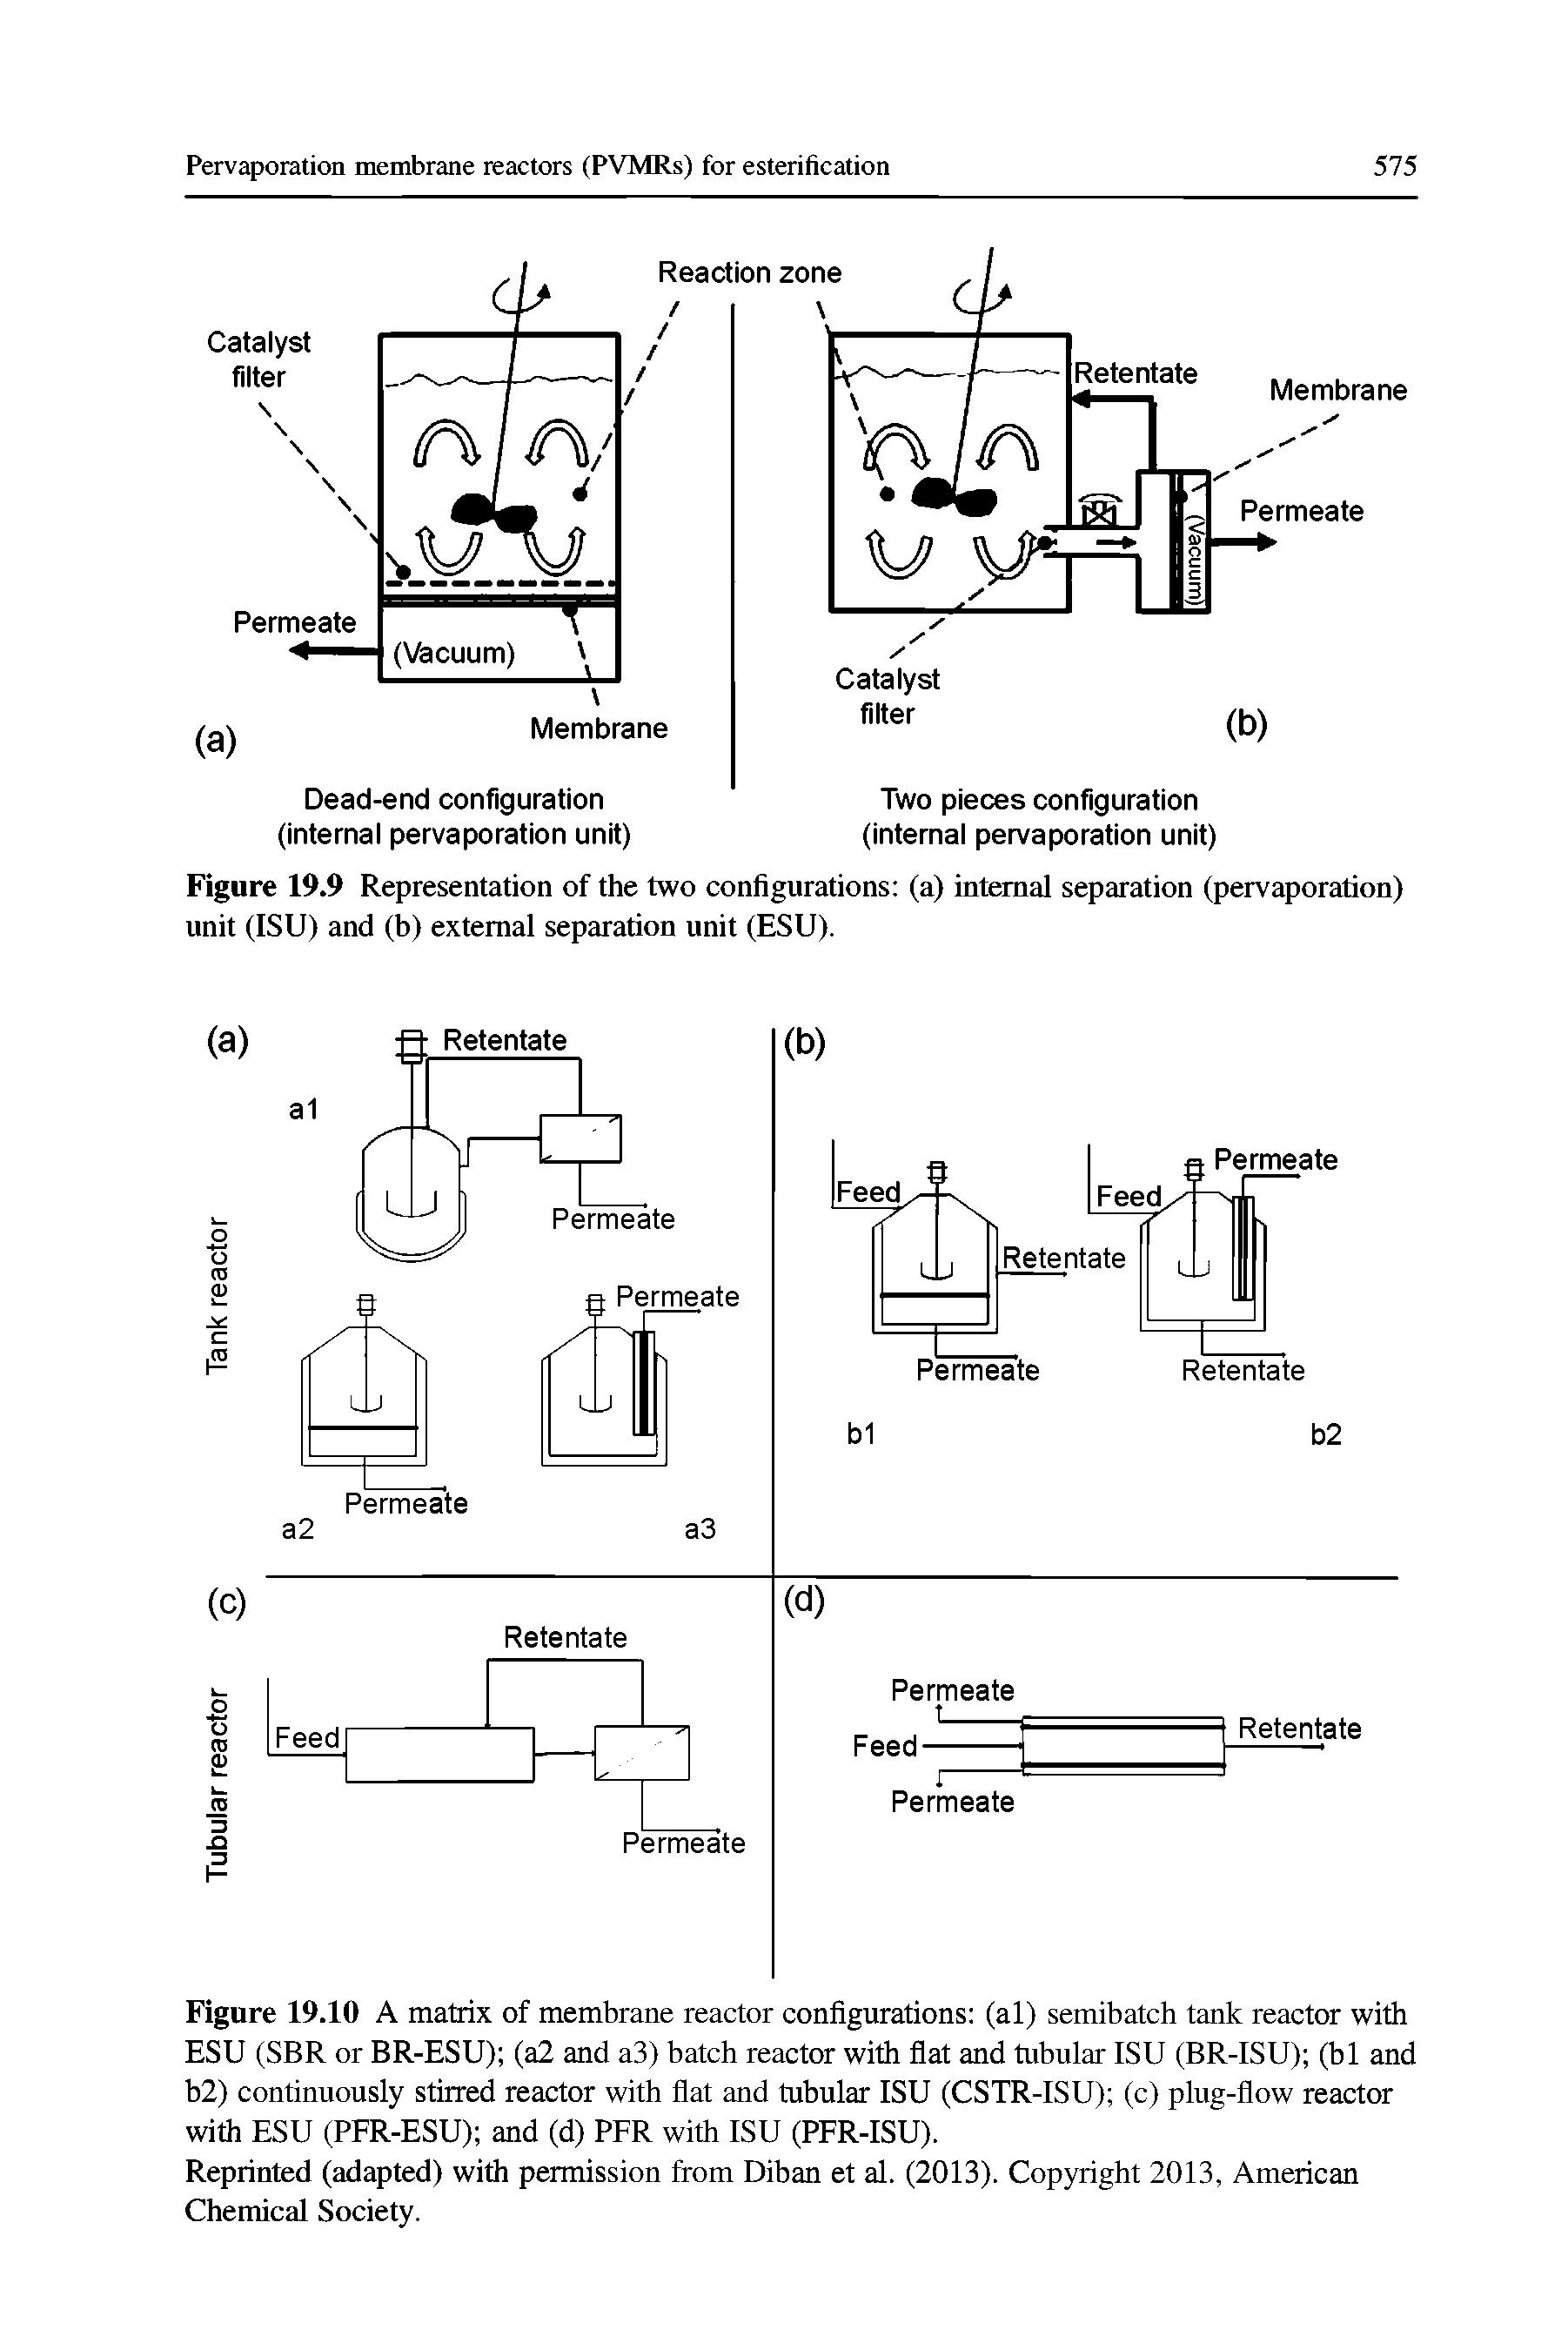 Figure 19.10 A matrix of membrane reactor configurations (al) semibatch tank reactor with ESU (SBR or BR-ESU) (a2 and a3) batch reactor with flat and tubular ISU (BR-ISU) (hi and b2) continuously stirred reactor with flat and tubular ISU (CSTR-ISU) (c) plug-flow reactor with ESU (PFR-ESU) and (d) PER with ISU (PFR-ISU).